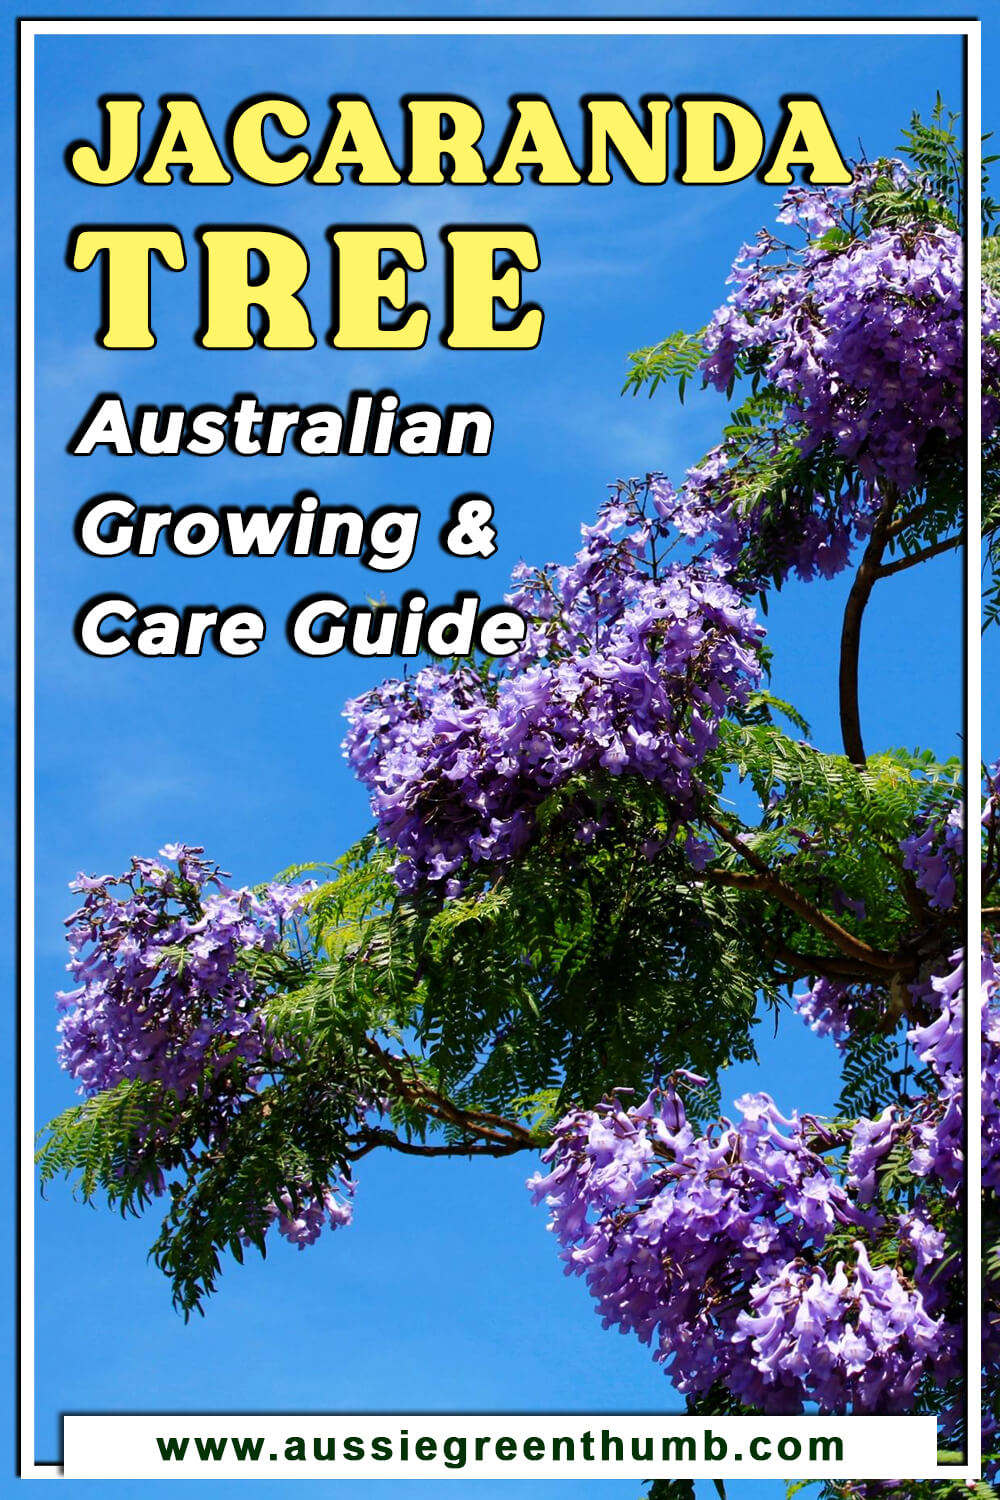 Jacaranda Tree Australian Growing & Care Guide